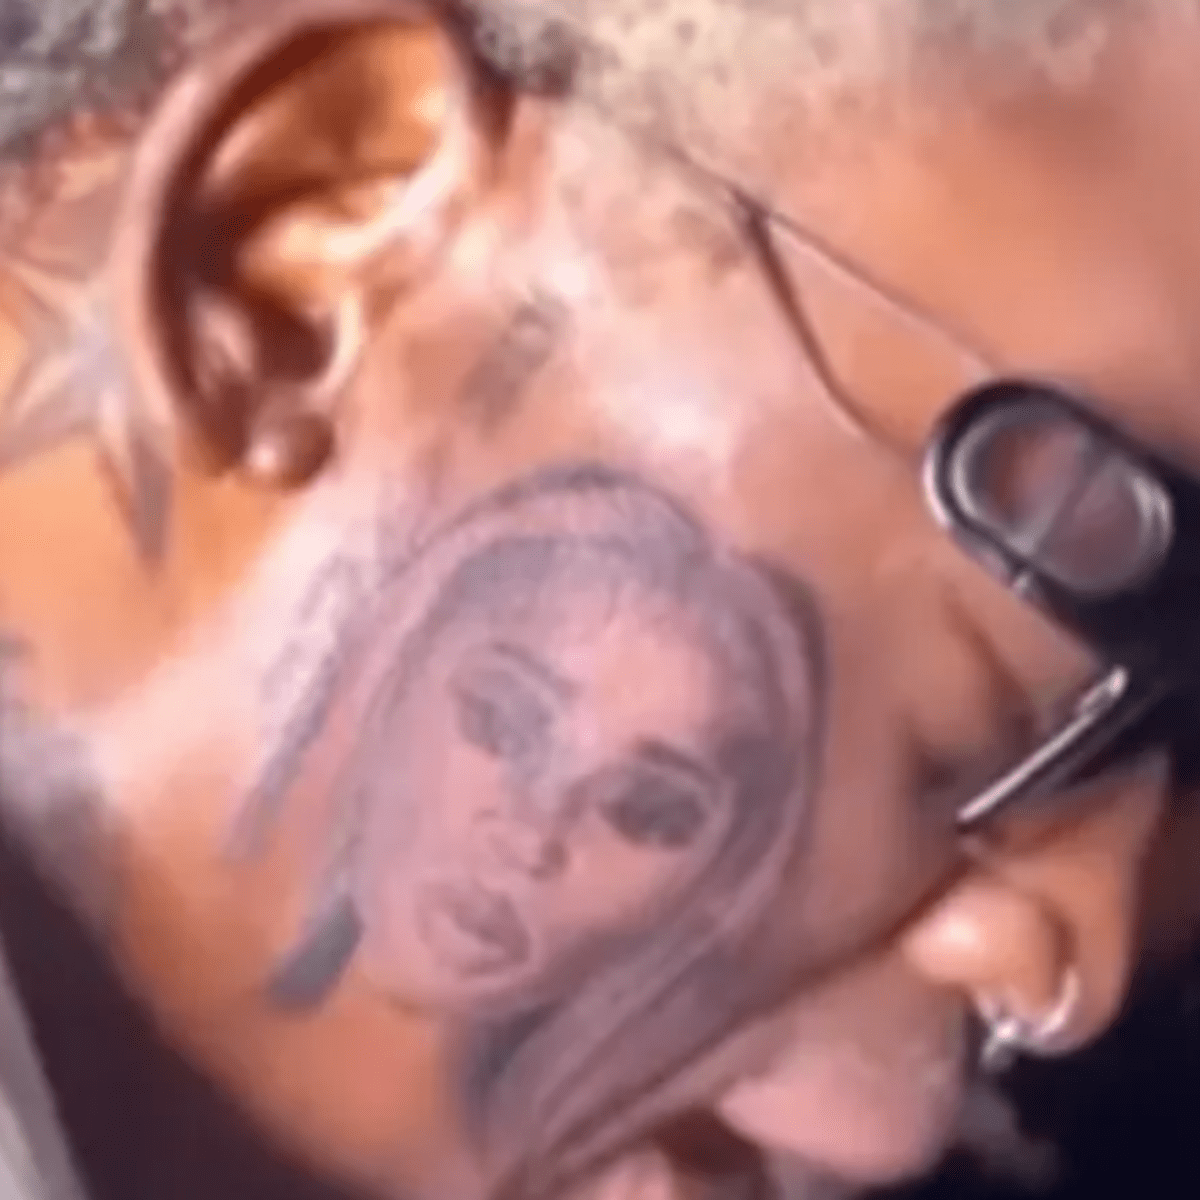 Dennis Rodman Gets Tattoo of His Face Next to Girlfriend Yella Yella's